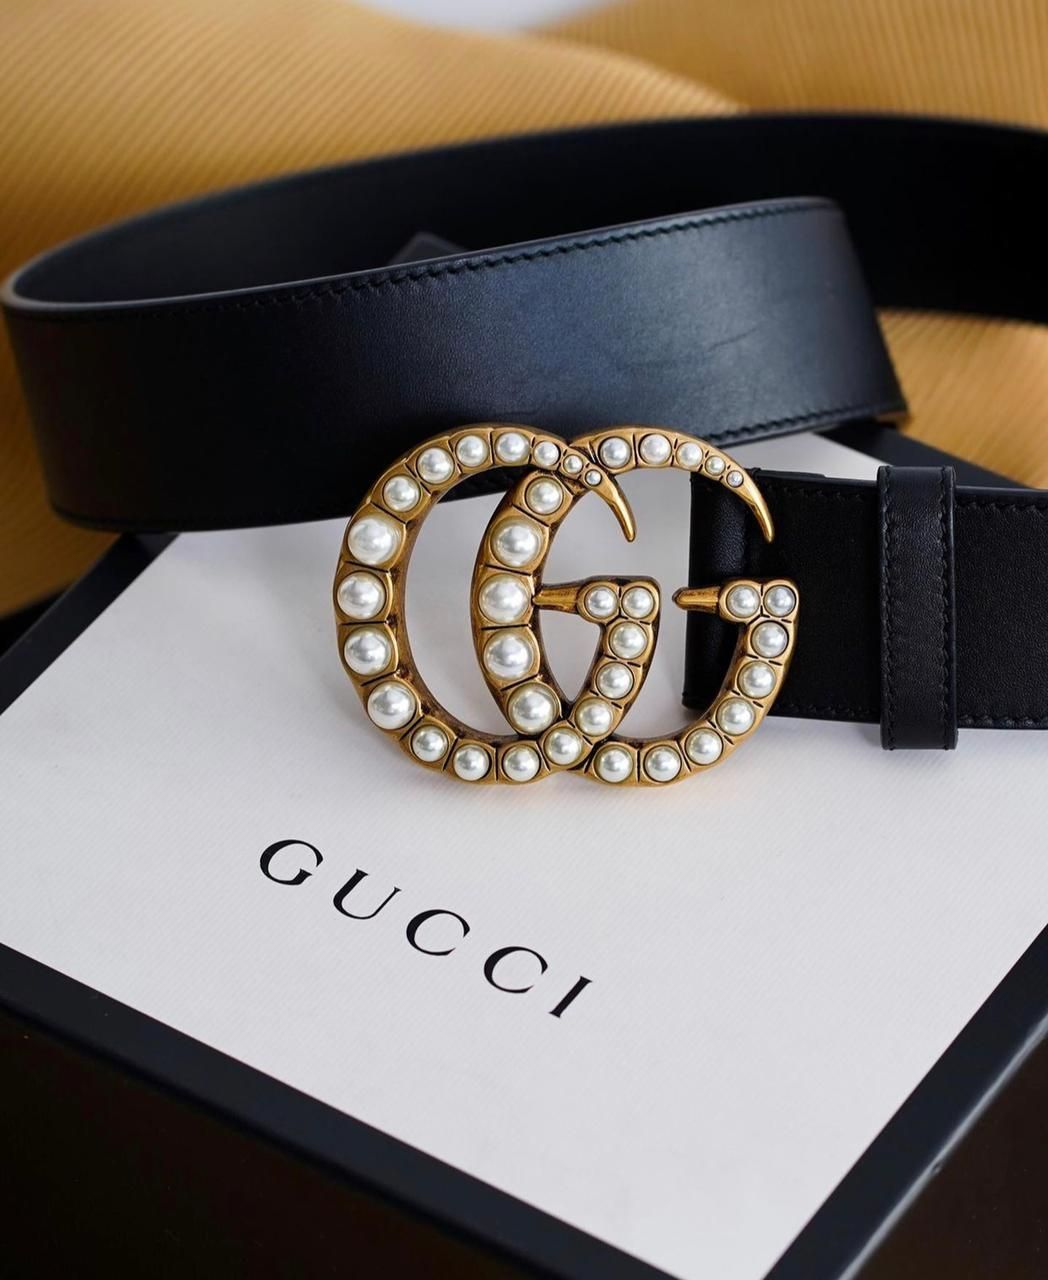 Gucci's iconic GG belt